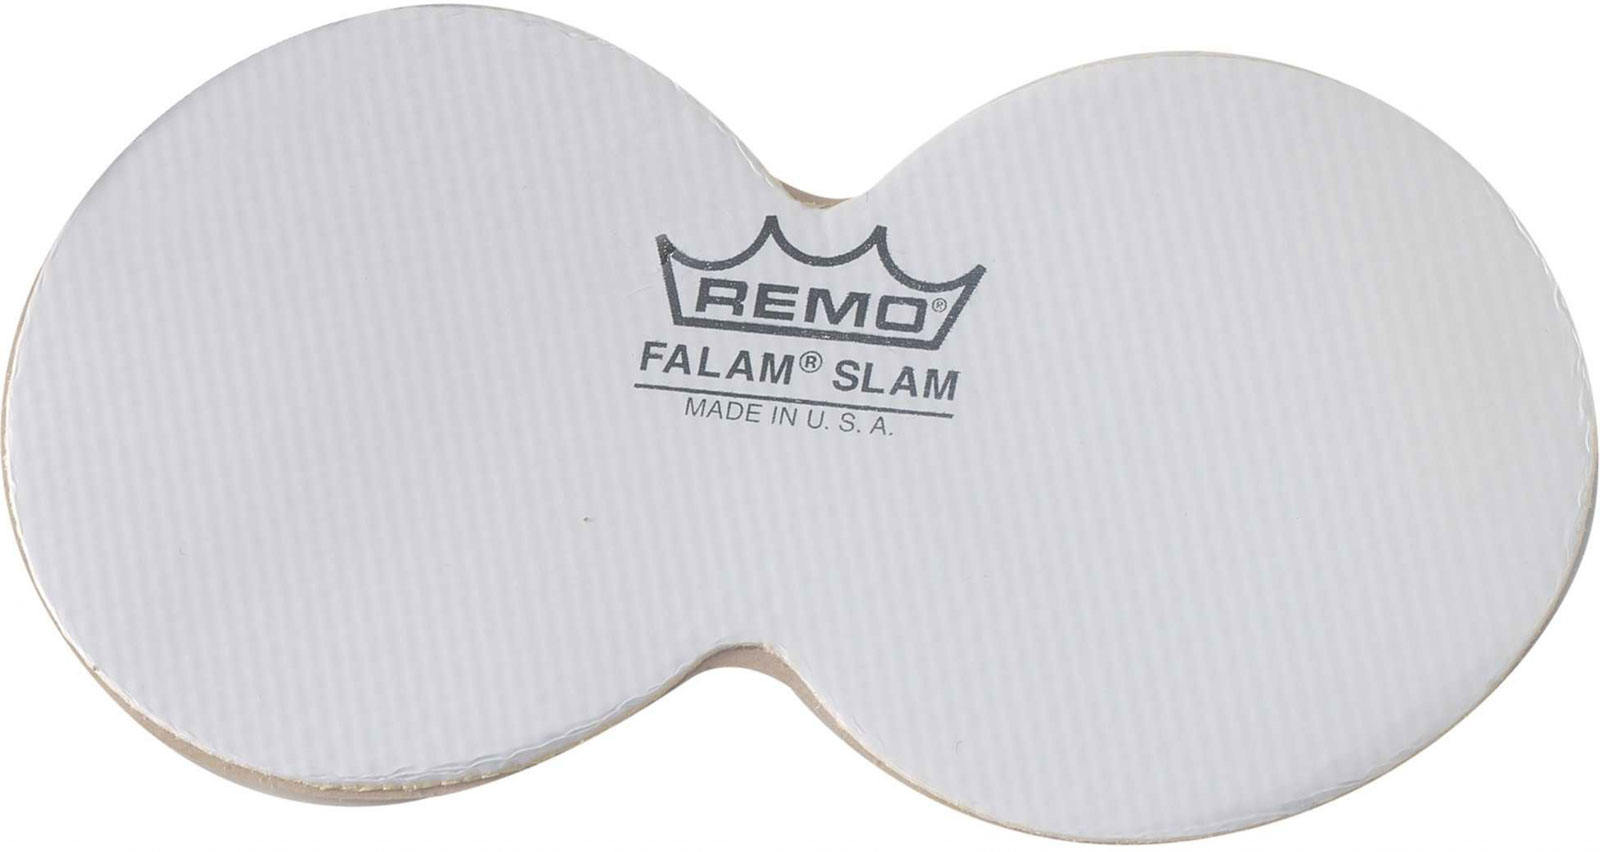 REMO DOUBLE FALAM SLAM - 2.5